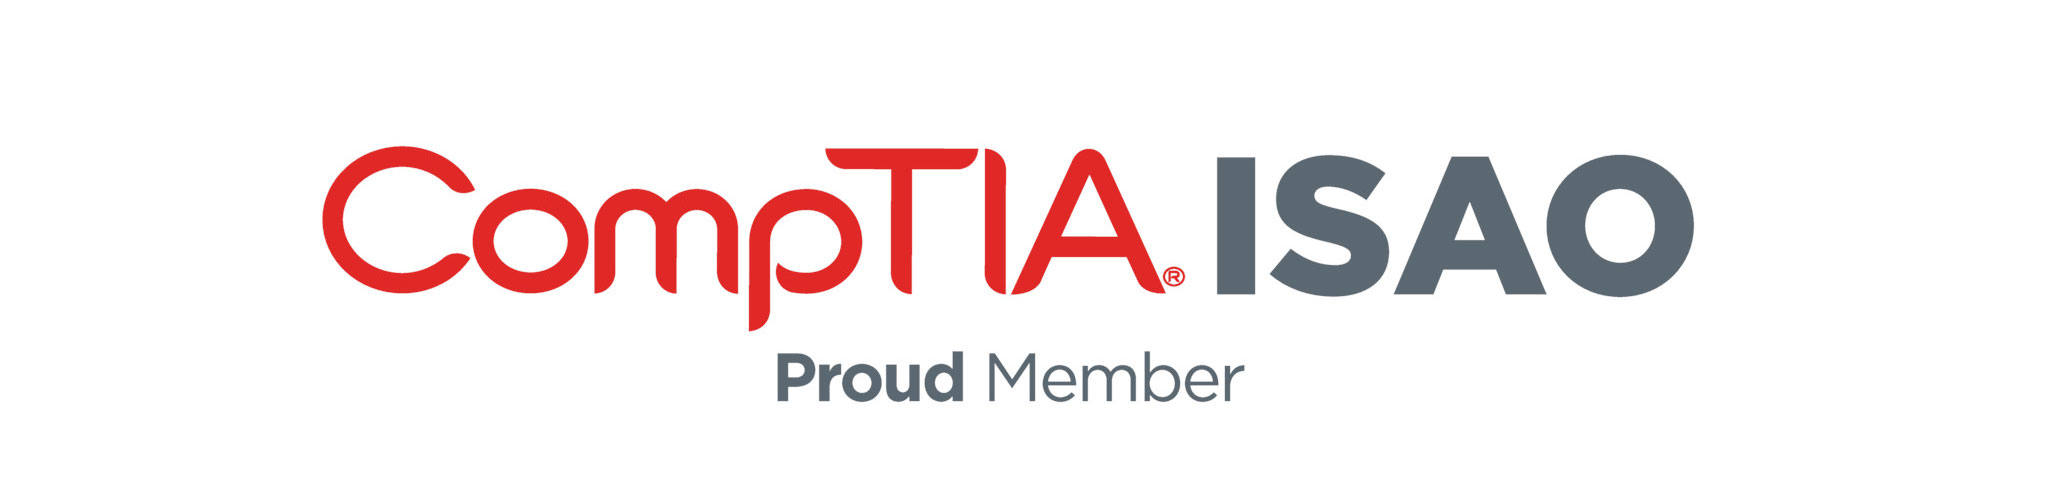 comptia-isao-proud-member-logo